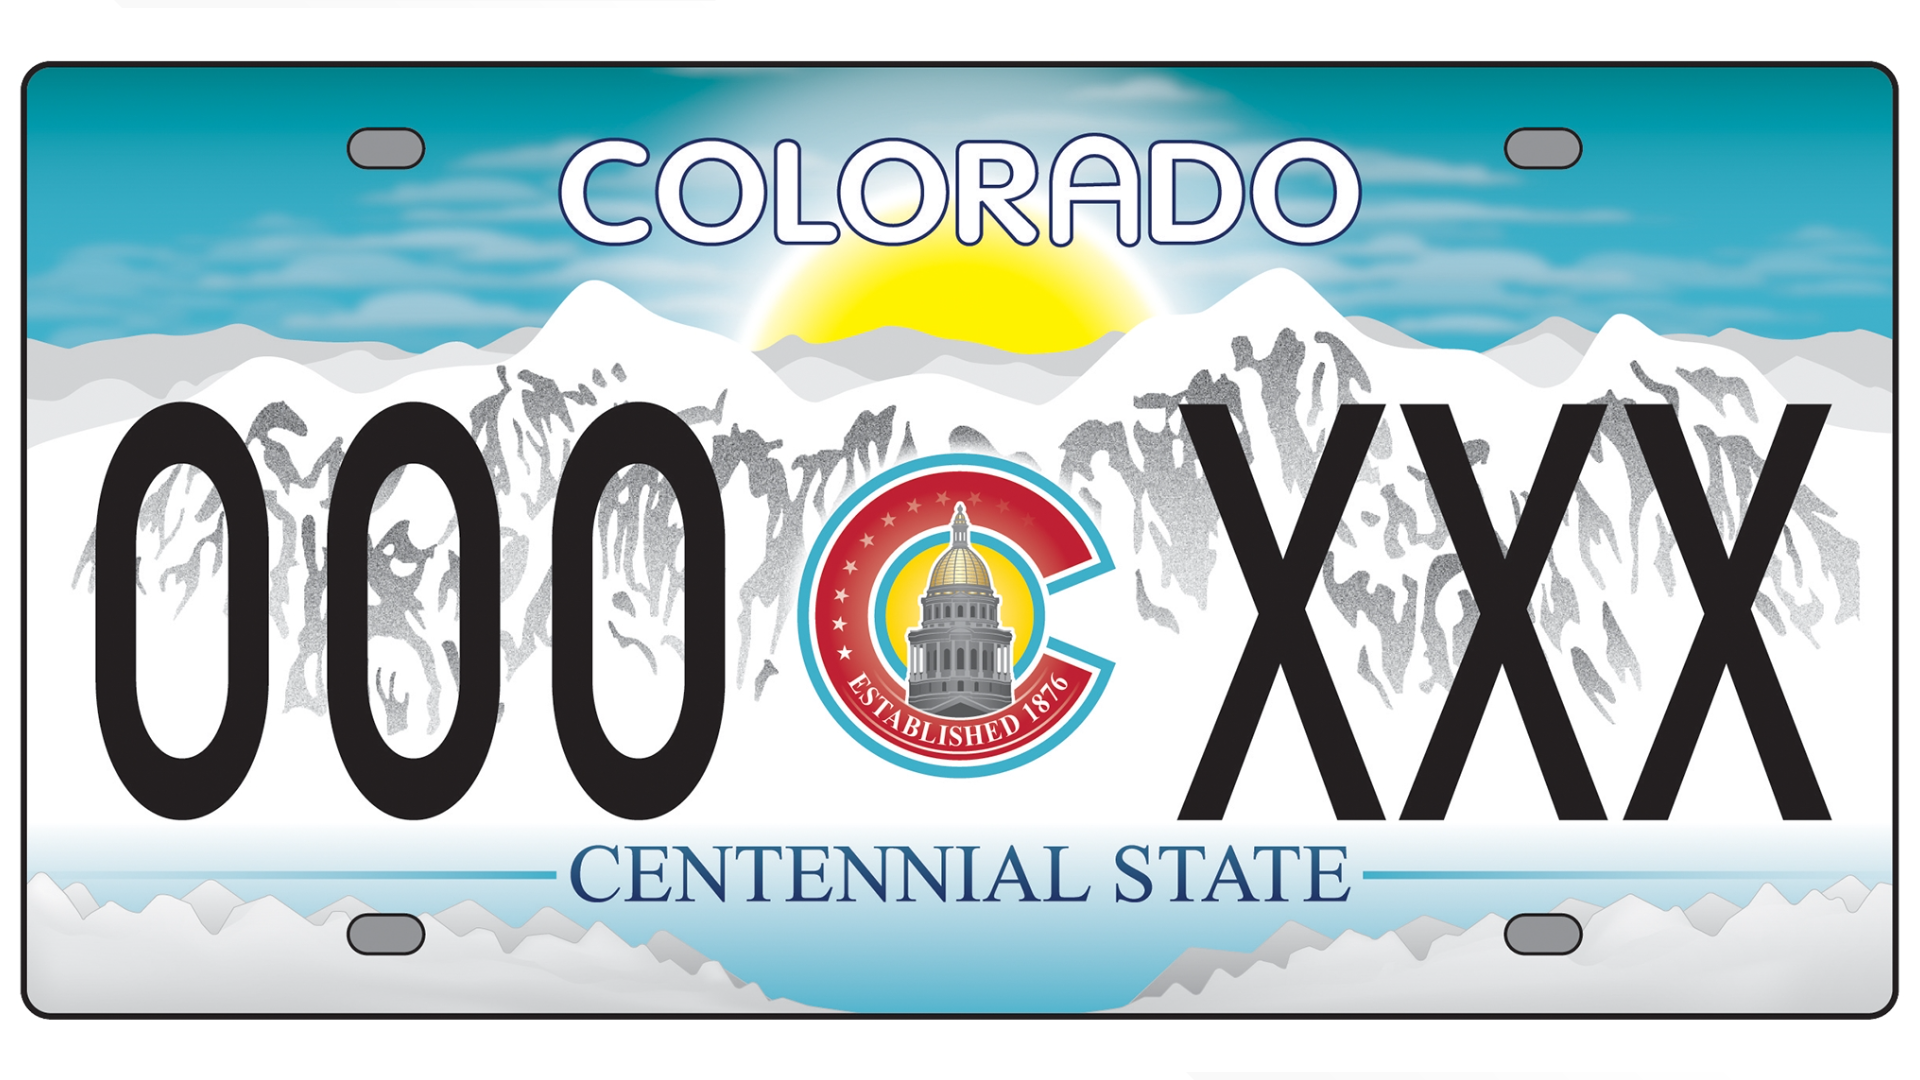 Colorado debuts the new 150th anniversary car license plate